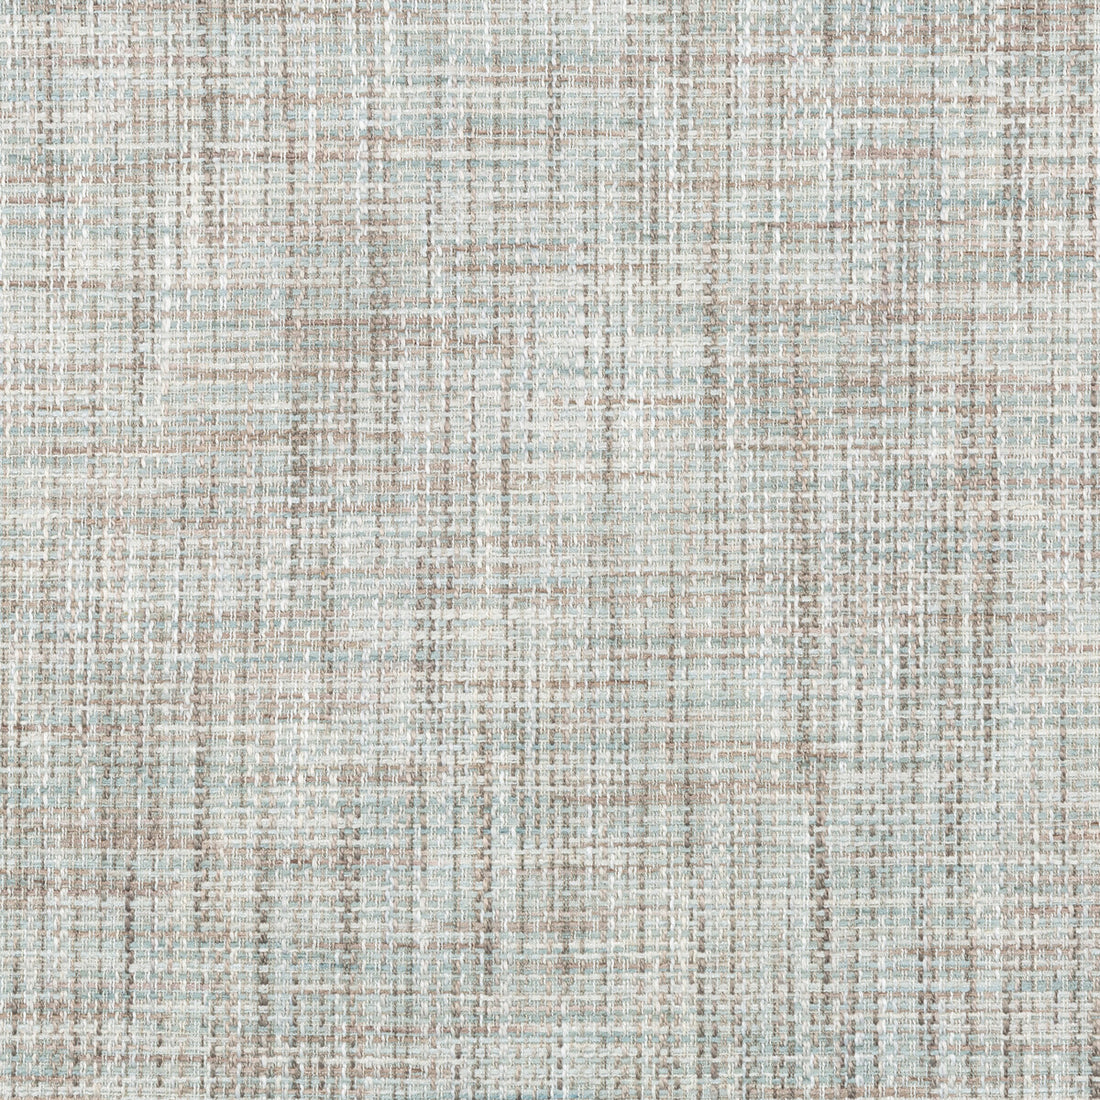 Kravet Smart fabric in 35928-1613 color - pattern 35928.1613.0 - by Kravet Smart in the Performance Kravetarmor collection